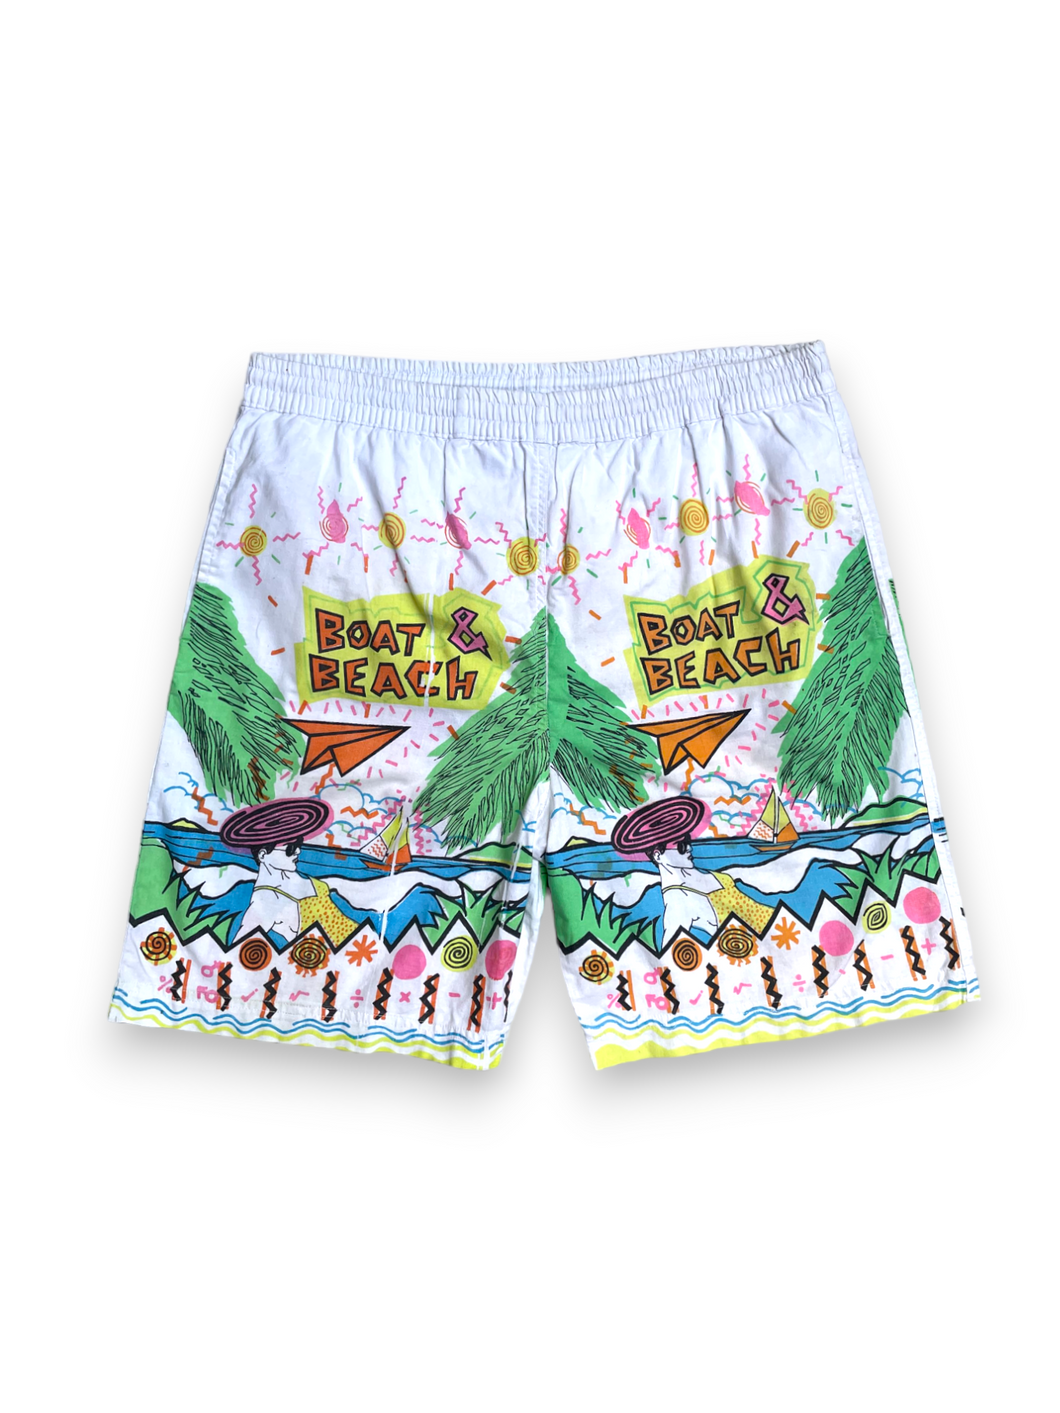 '80s white beach scene summer shorts